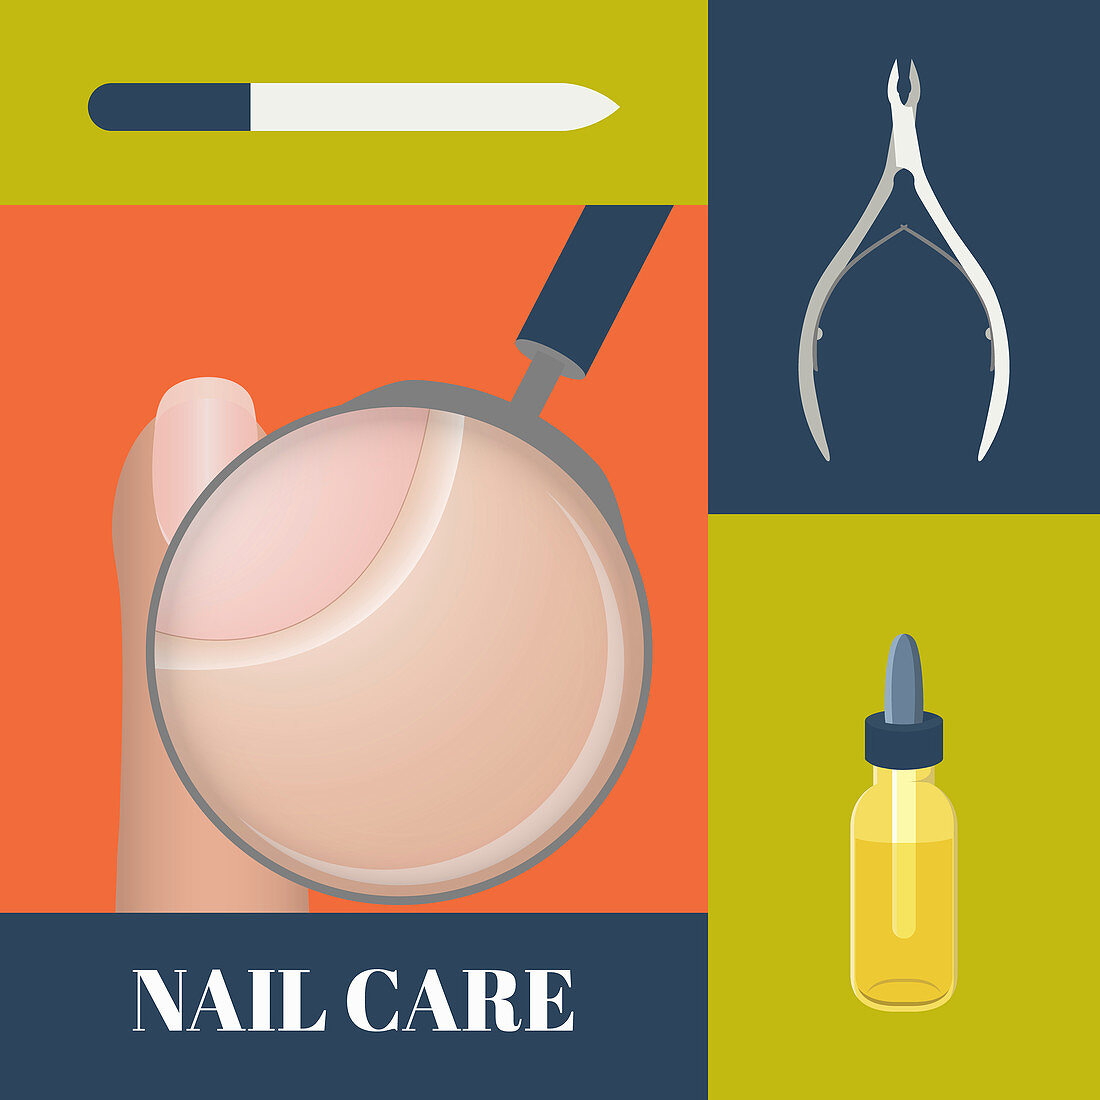 Nail care, illustration